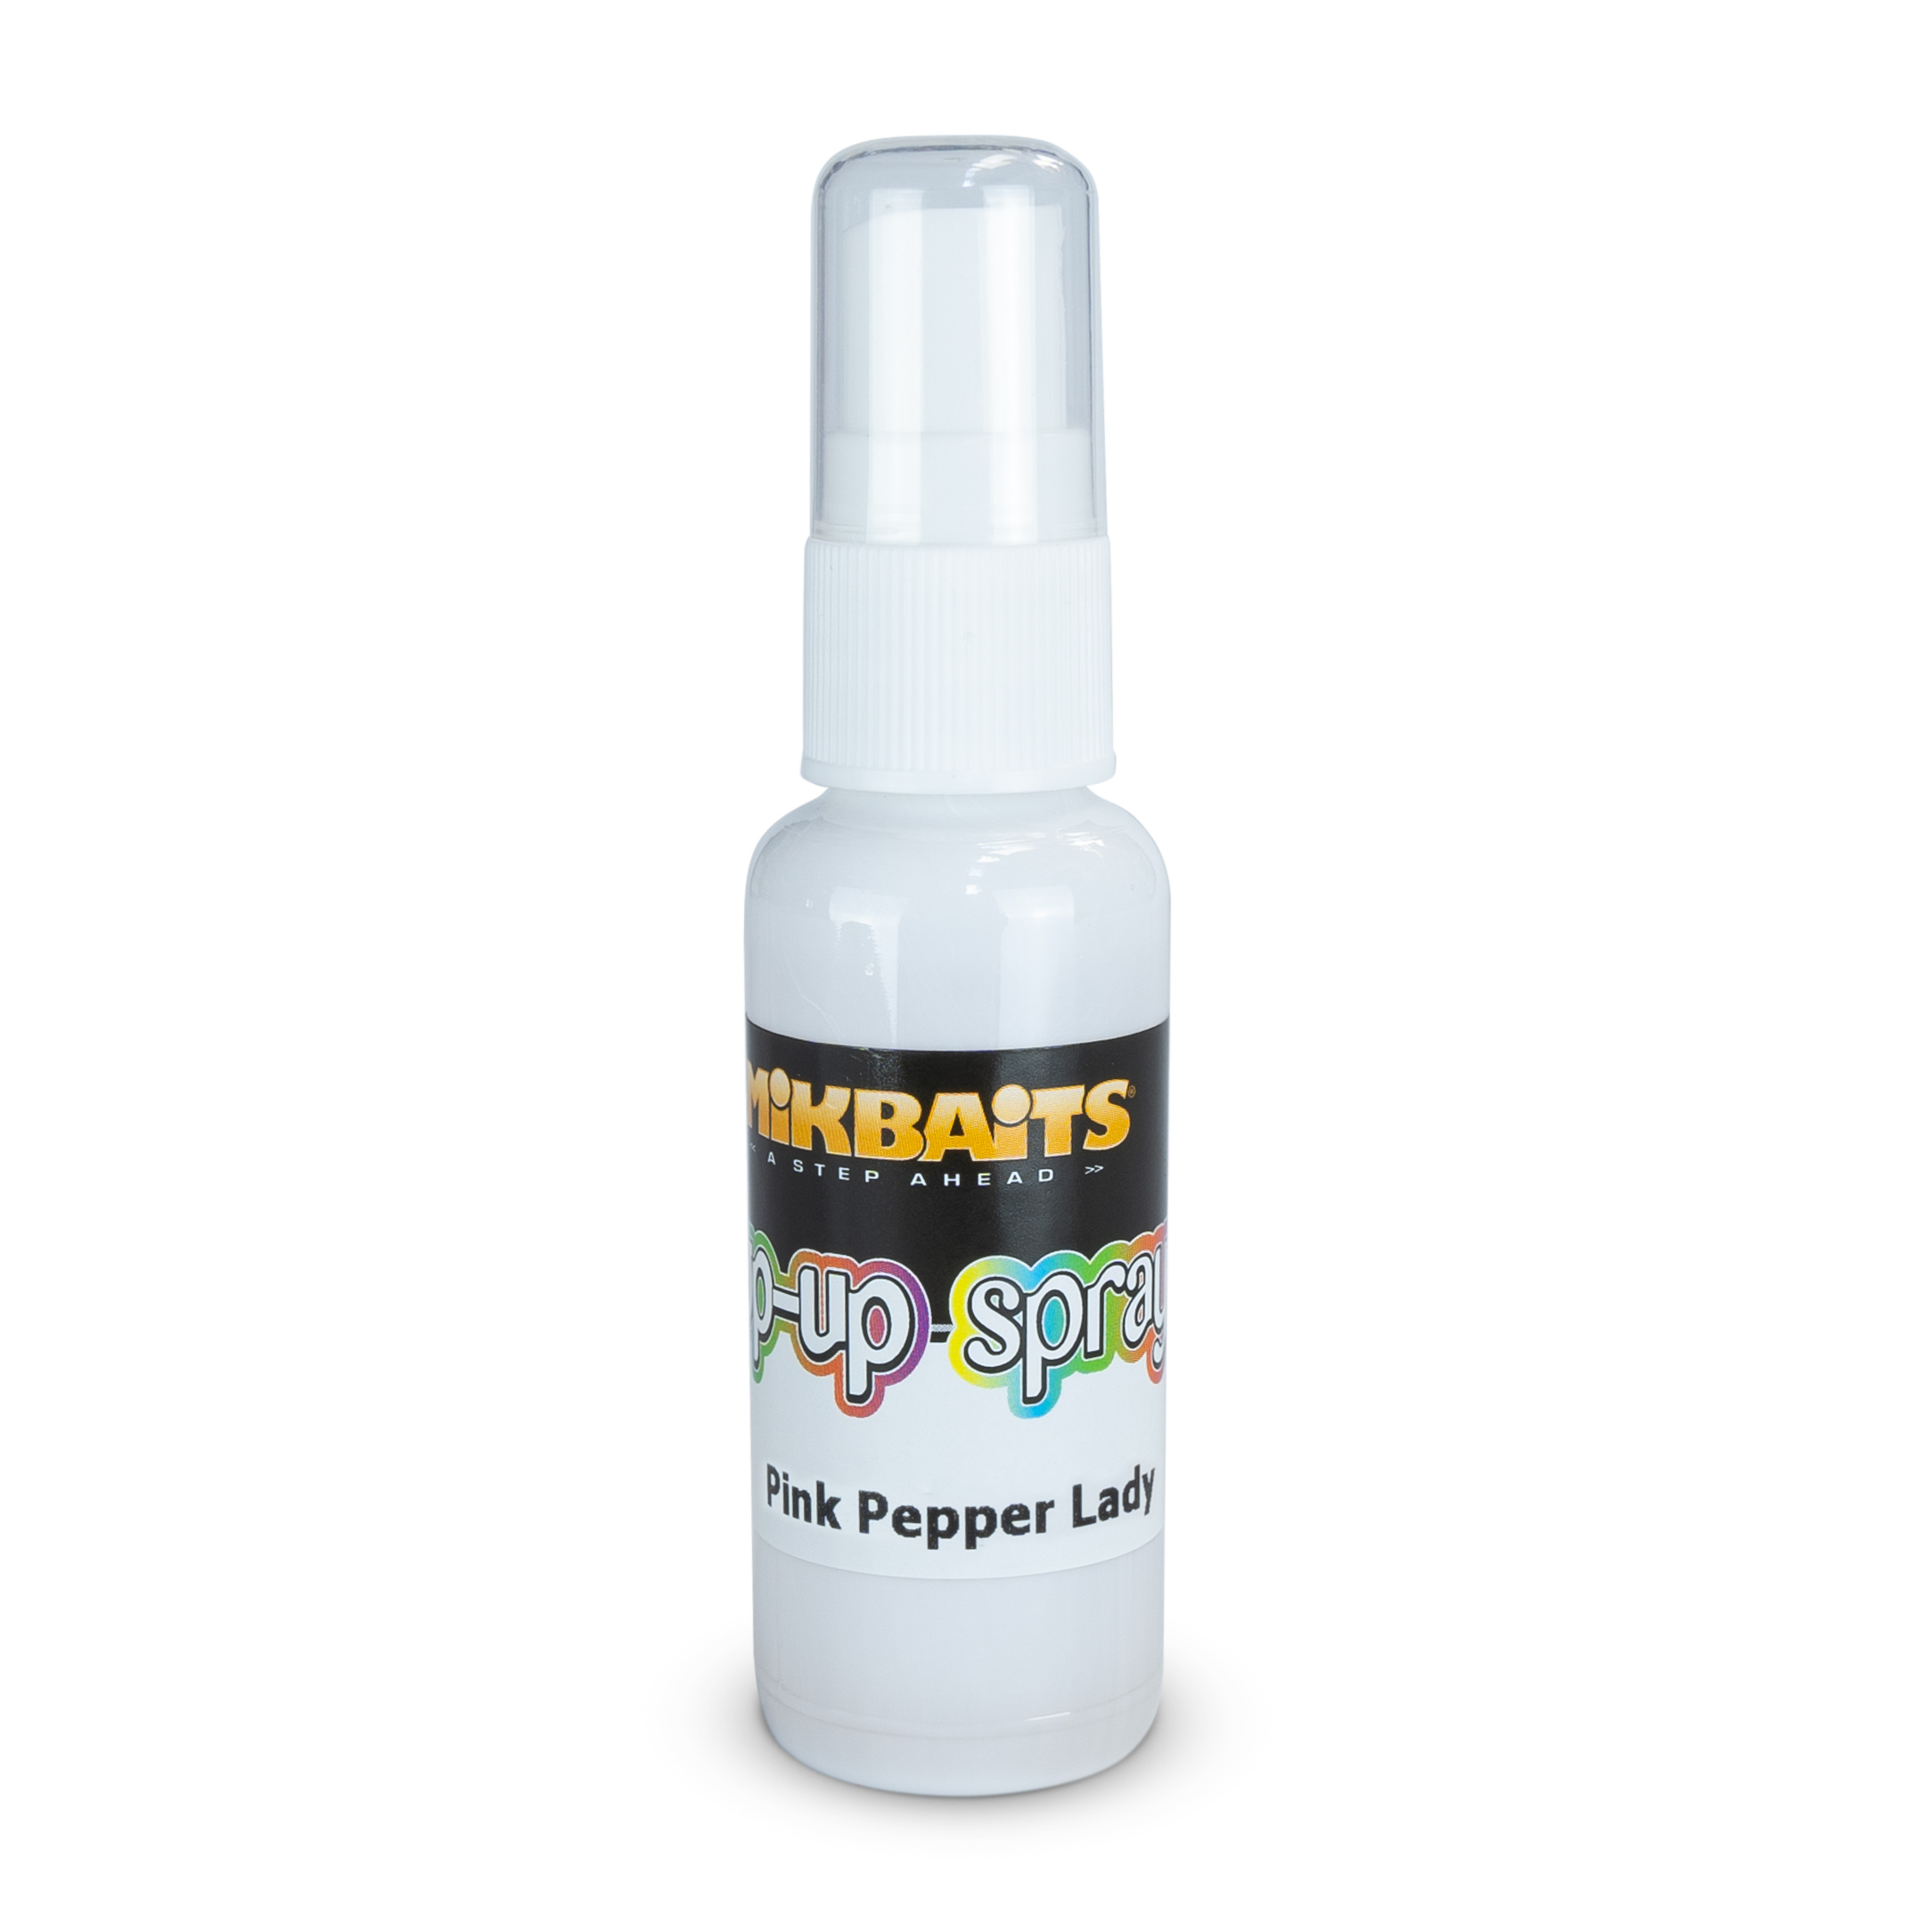 Mikbaits pop-up spray 30ml Příchuť: Pink Pepper Lady